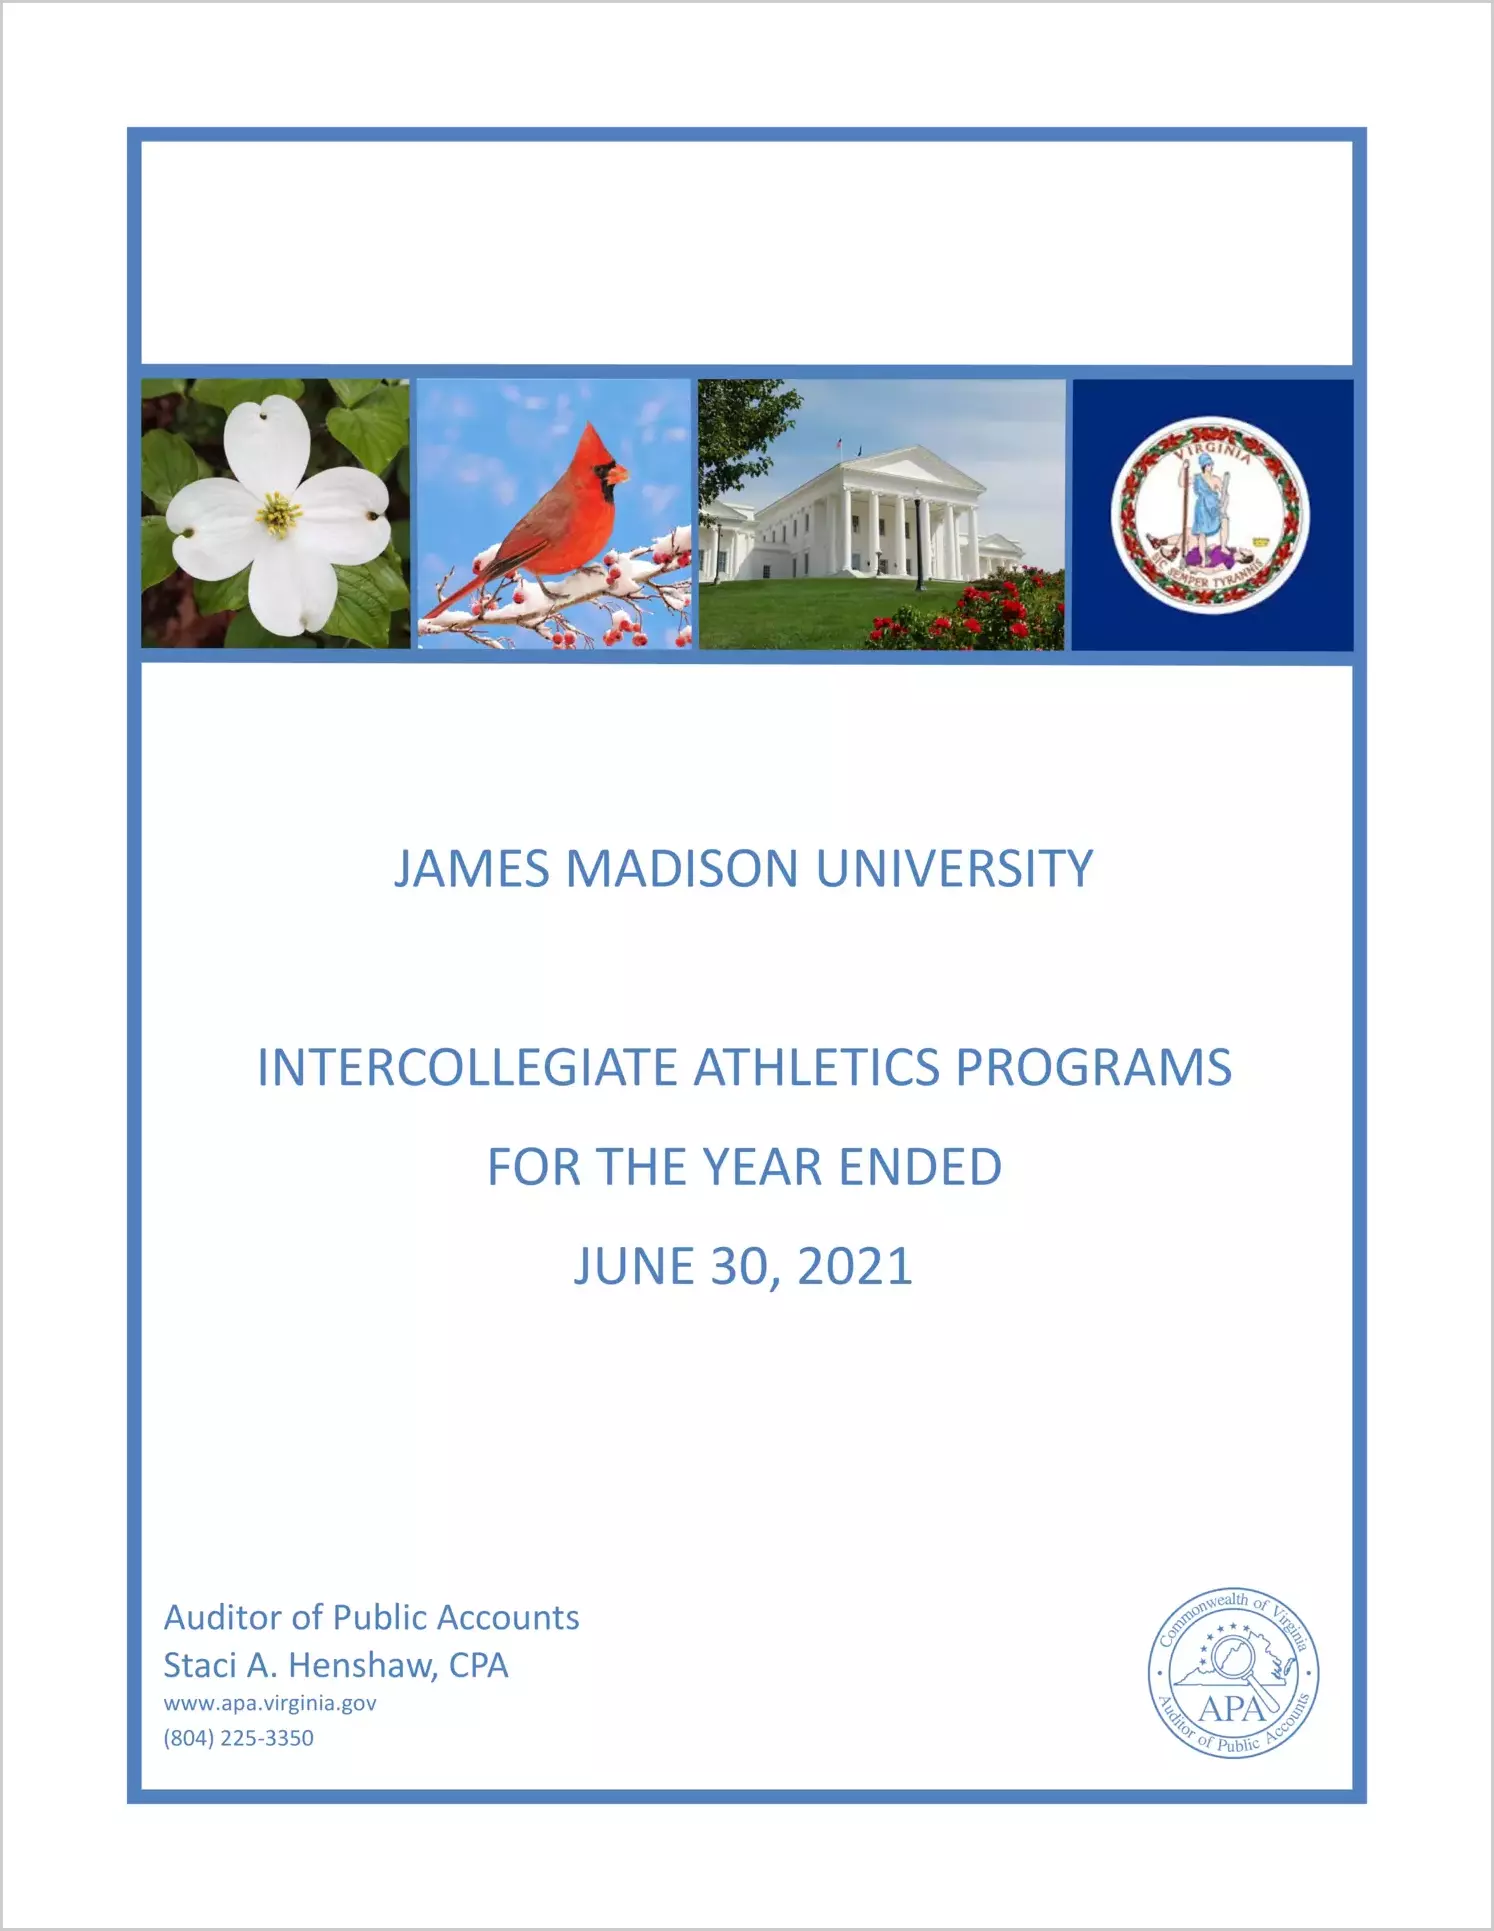 James Madison University Intercollegiate Athletics Programs for the year ended June 30, 2021